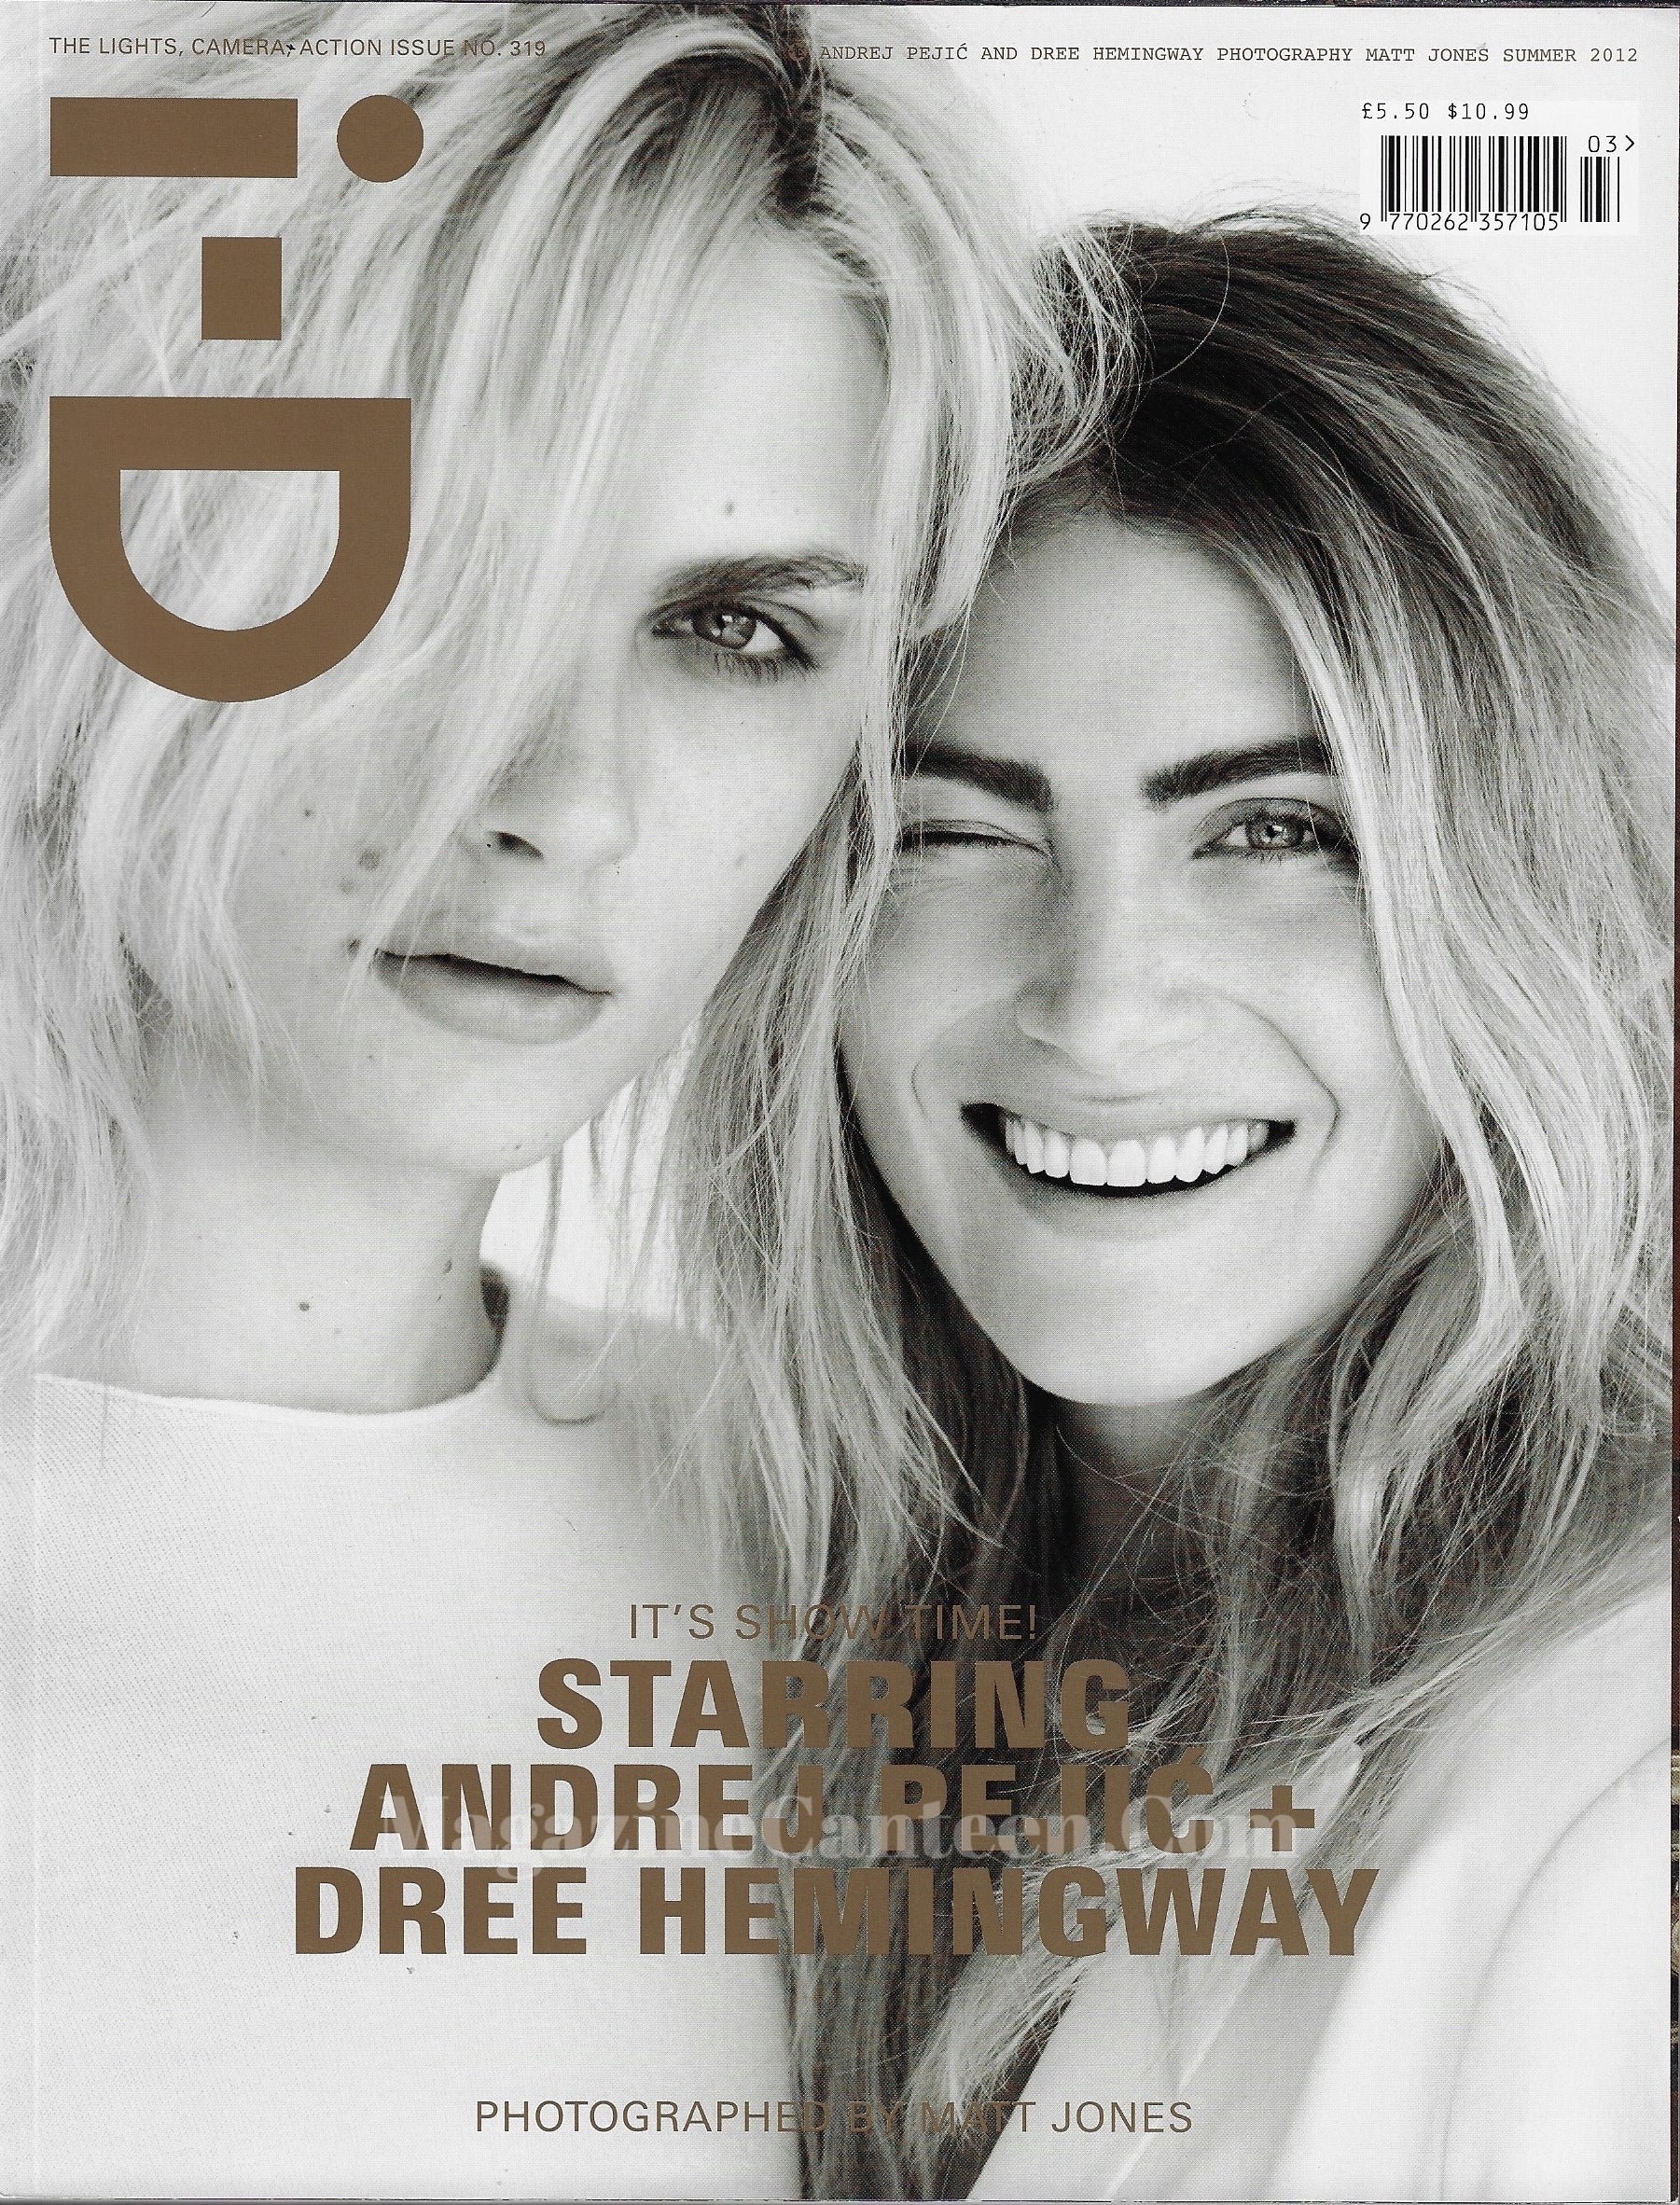 I-D Magazine 319 - Andrej Pejic & Dree Hemingway 2012